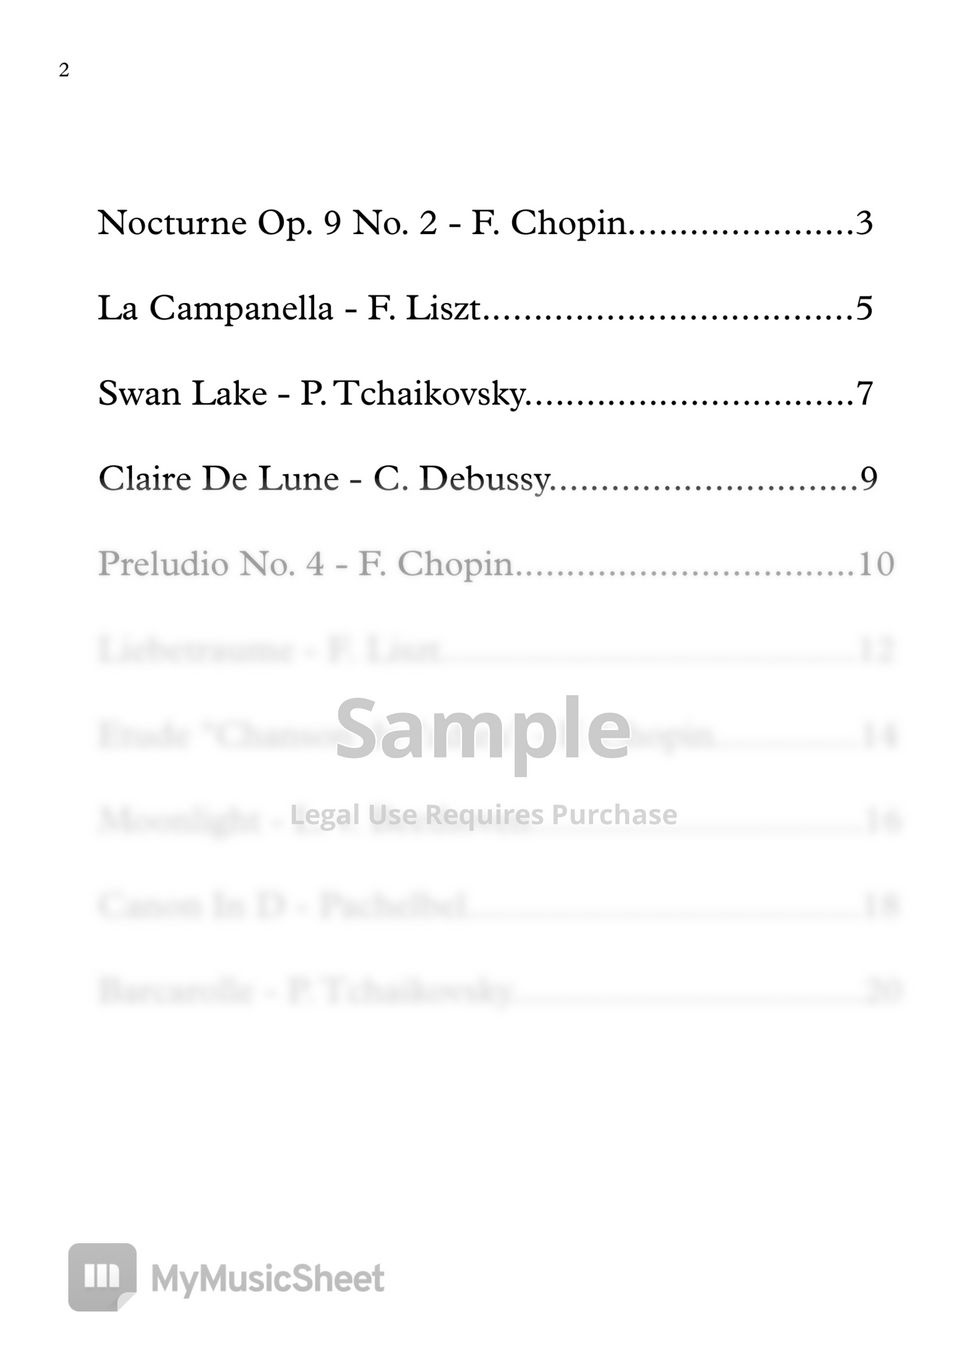 Chopin, Beethoven, Liszt, Tchaikovsky - 10 Partituras de Música Clásica by Ezequiel Coria